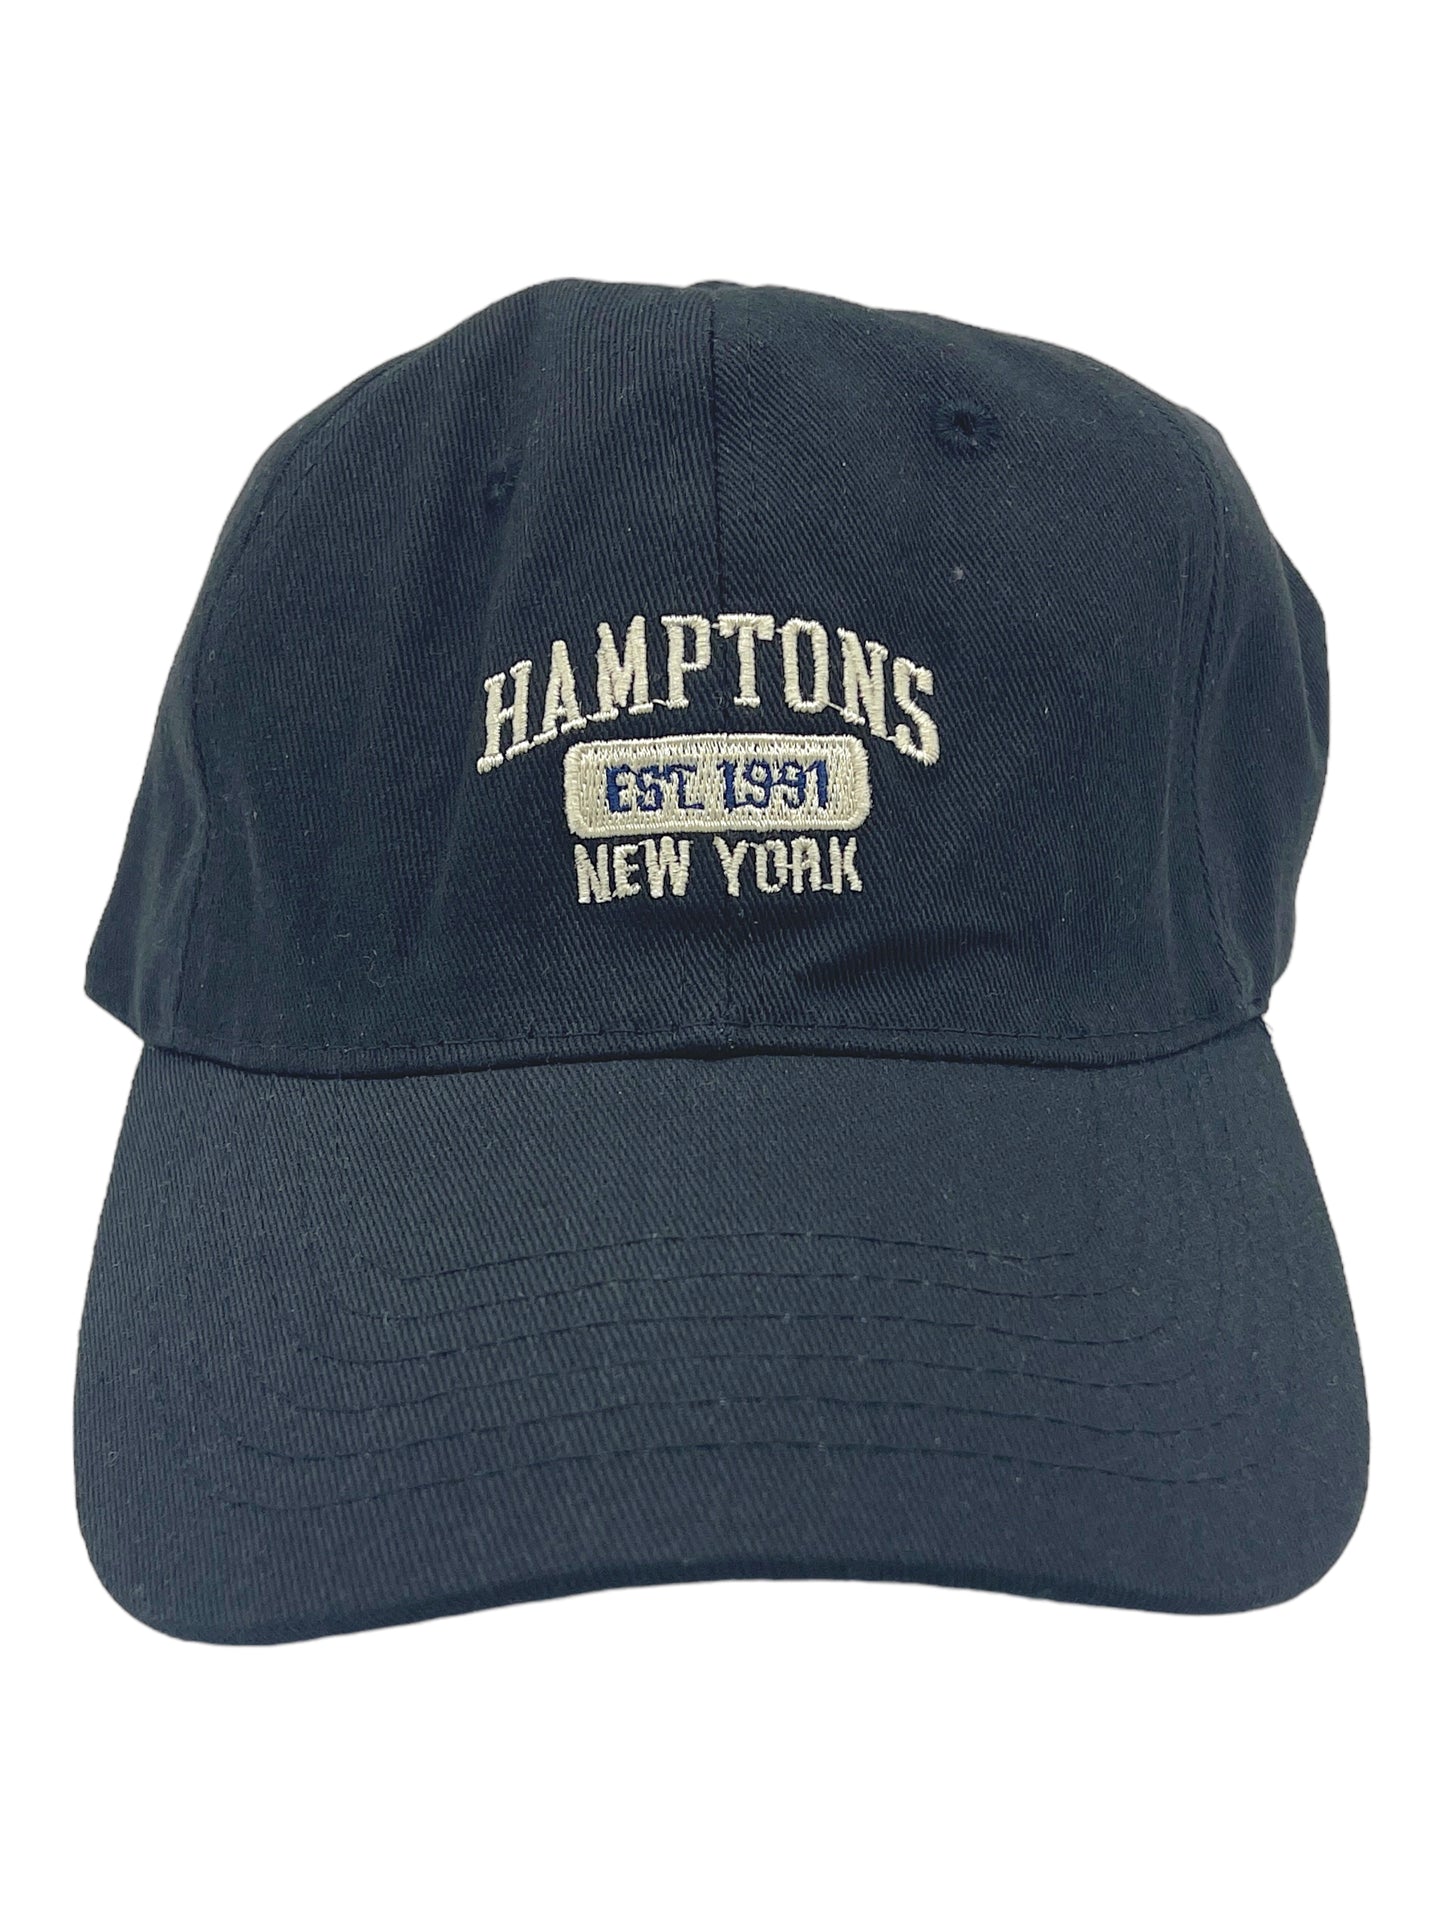 “HAMPTONS, NEW YORK” Adjustable Dad Cap